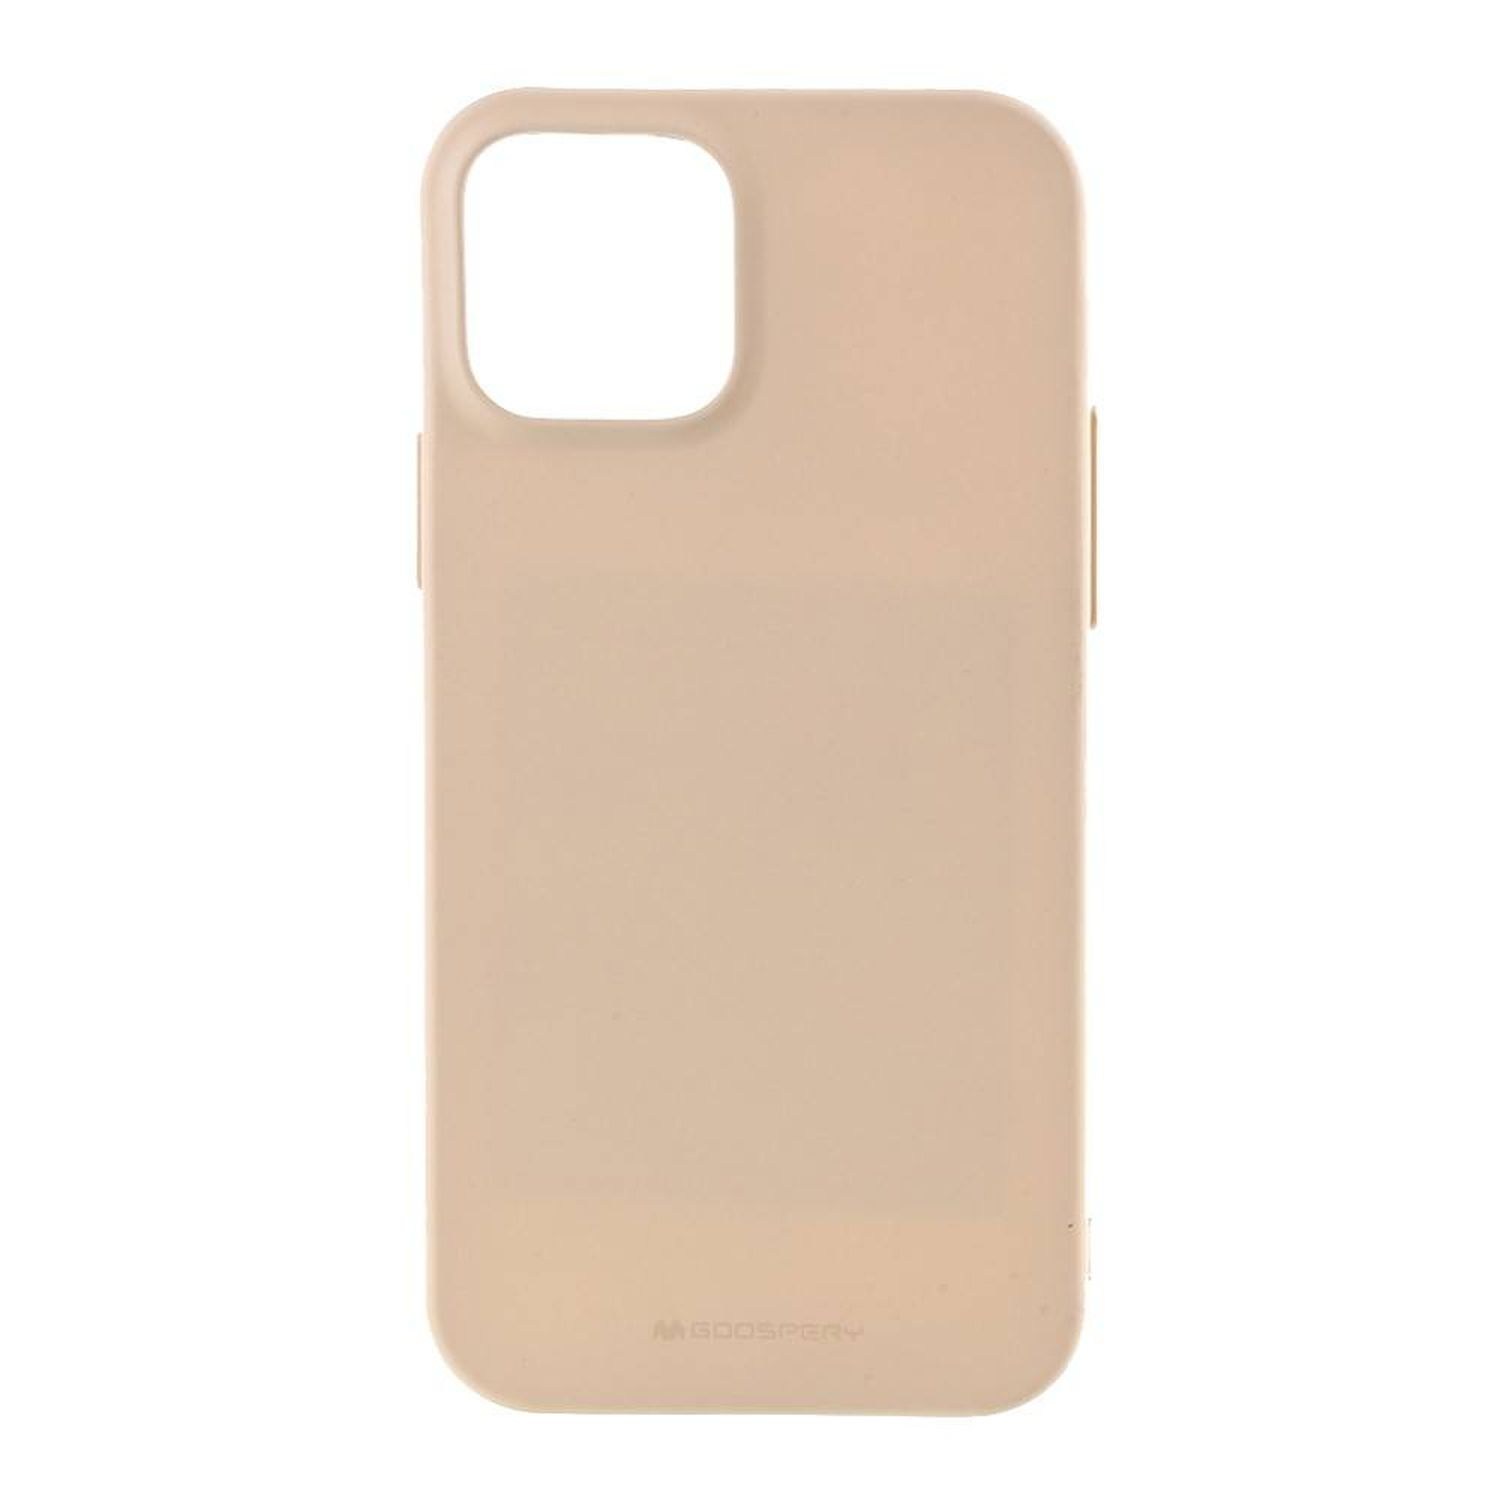 Beige, Jelly Bumper 12 cofi1453® Beige Bumper, 12, mit Apple, iPhone iPhone Schutzhülle Case in kompatibel Handyhülle Case Soft COFI